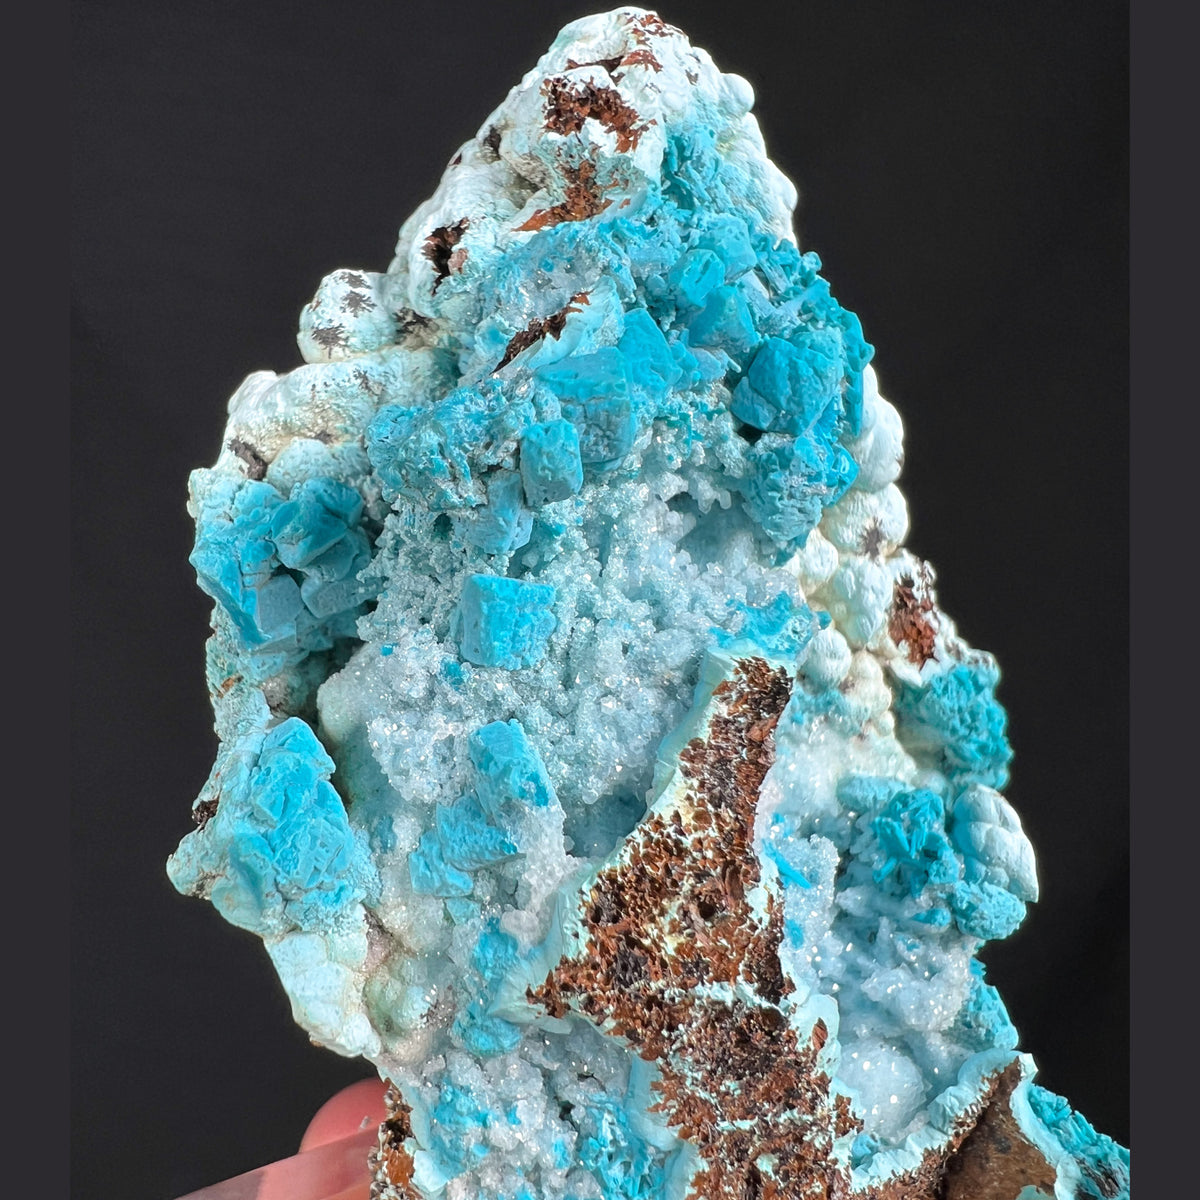 Chrysocolla, Dolomite and Drusy Quartz Mineral Specimen from the Congo